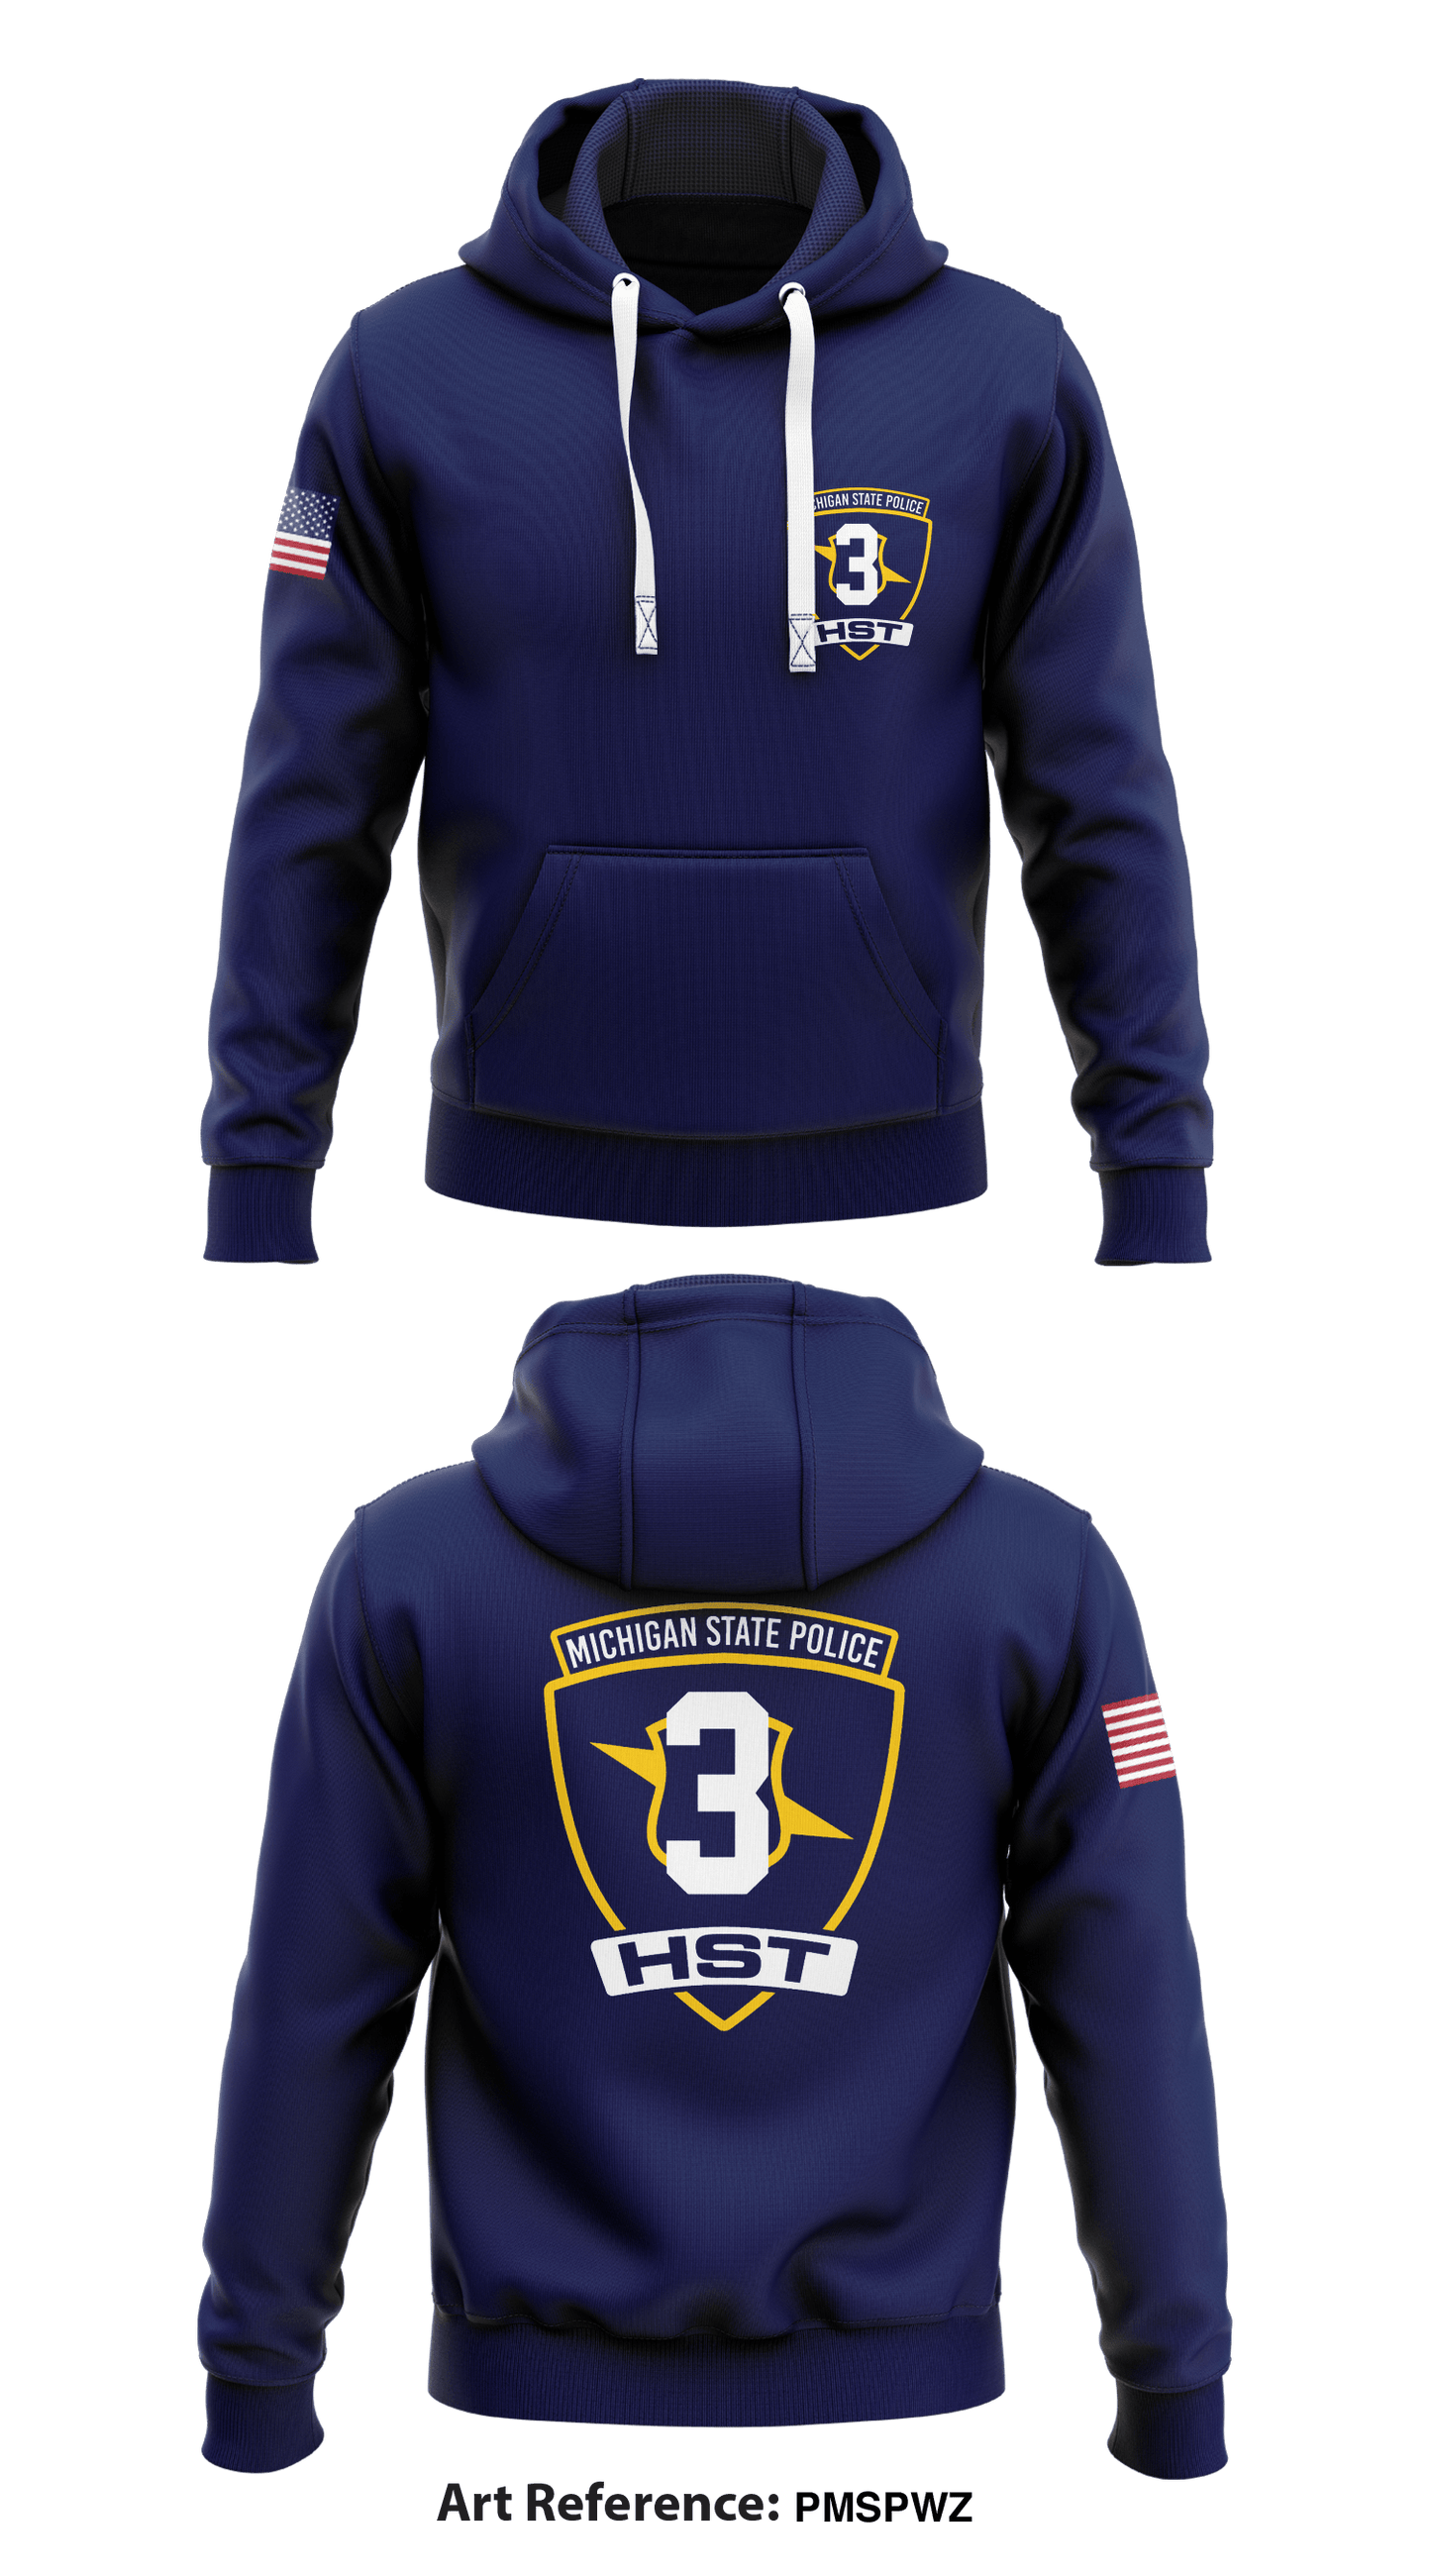 Third District Hometown Security Team Store 1  Core Men's Hooded Performance Sweatshirt - PMSpwZ